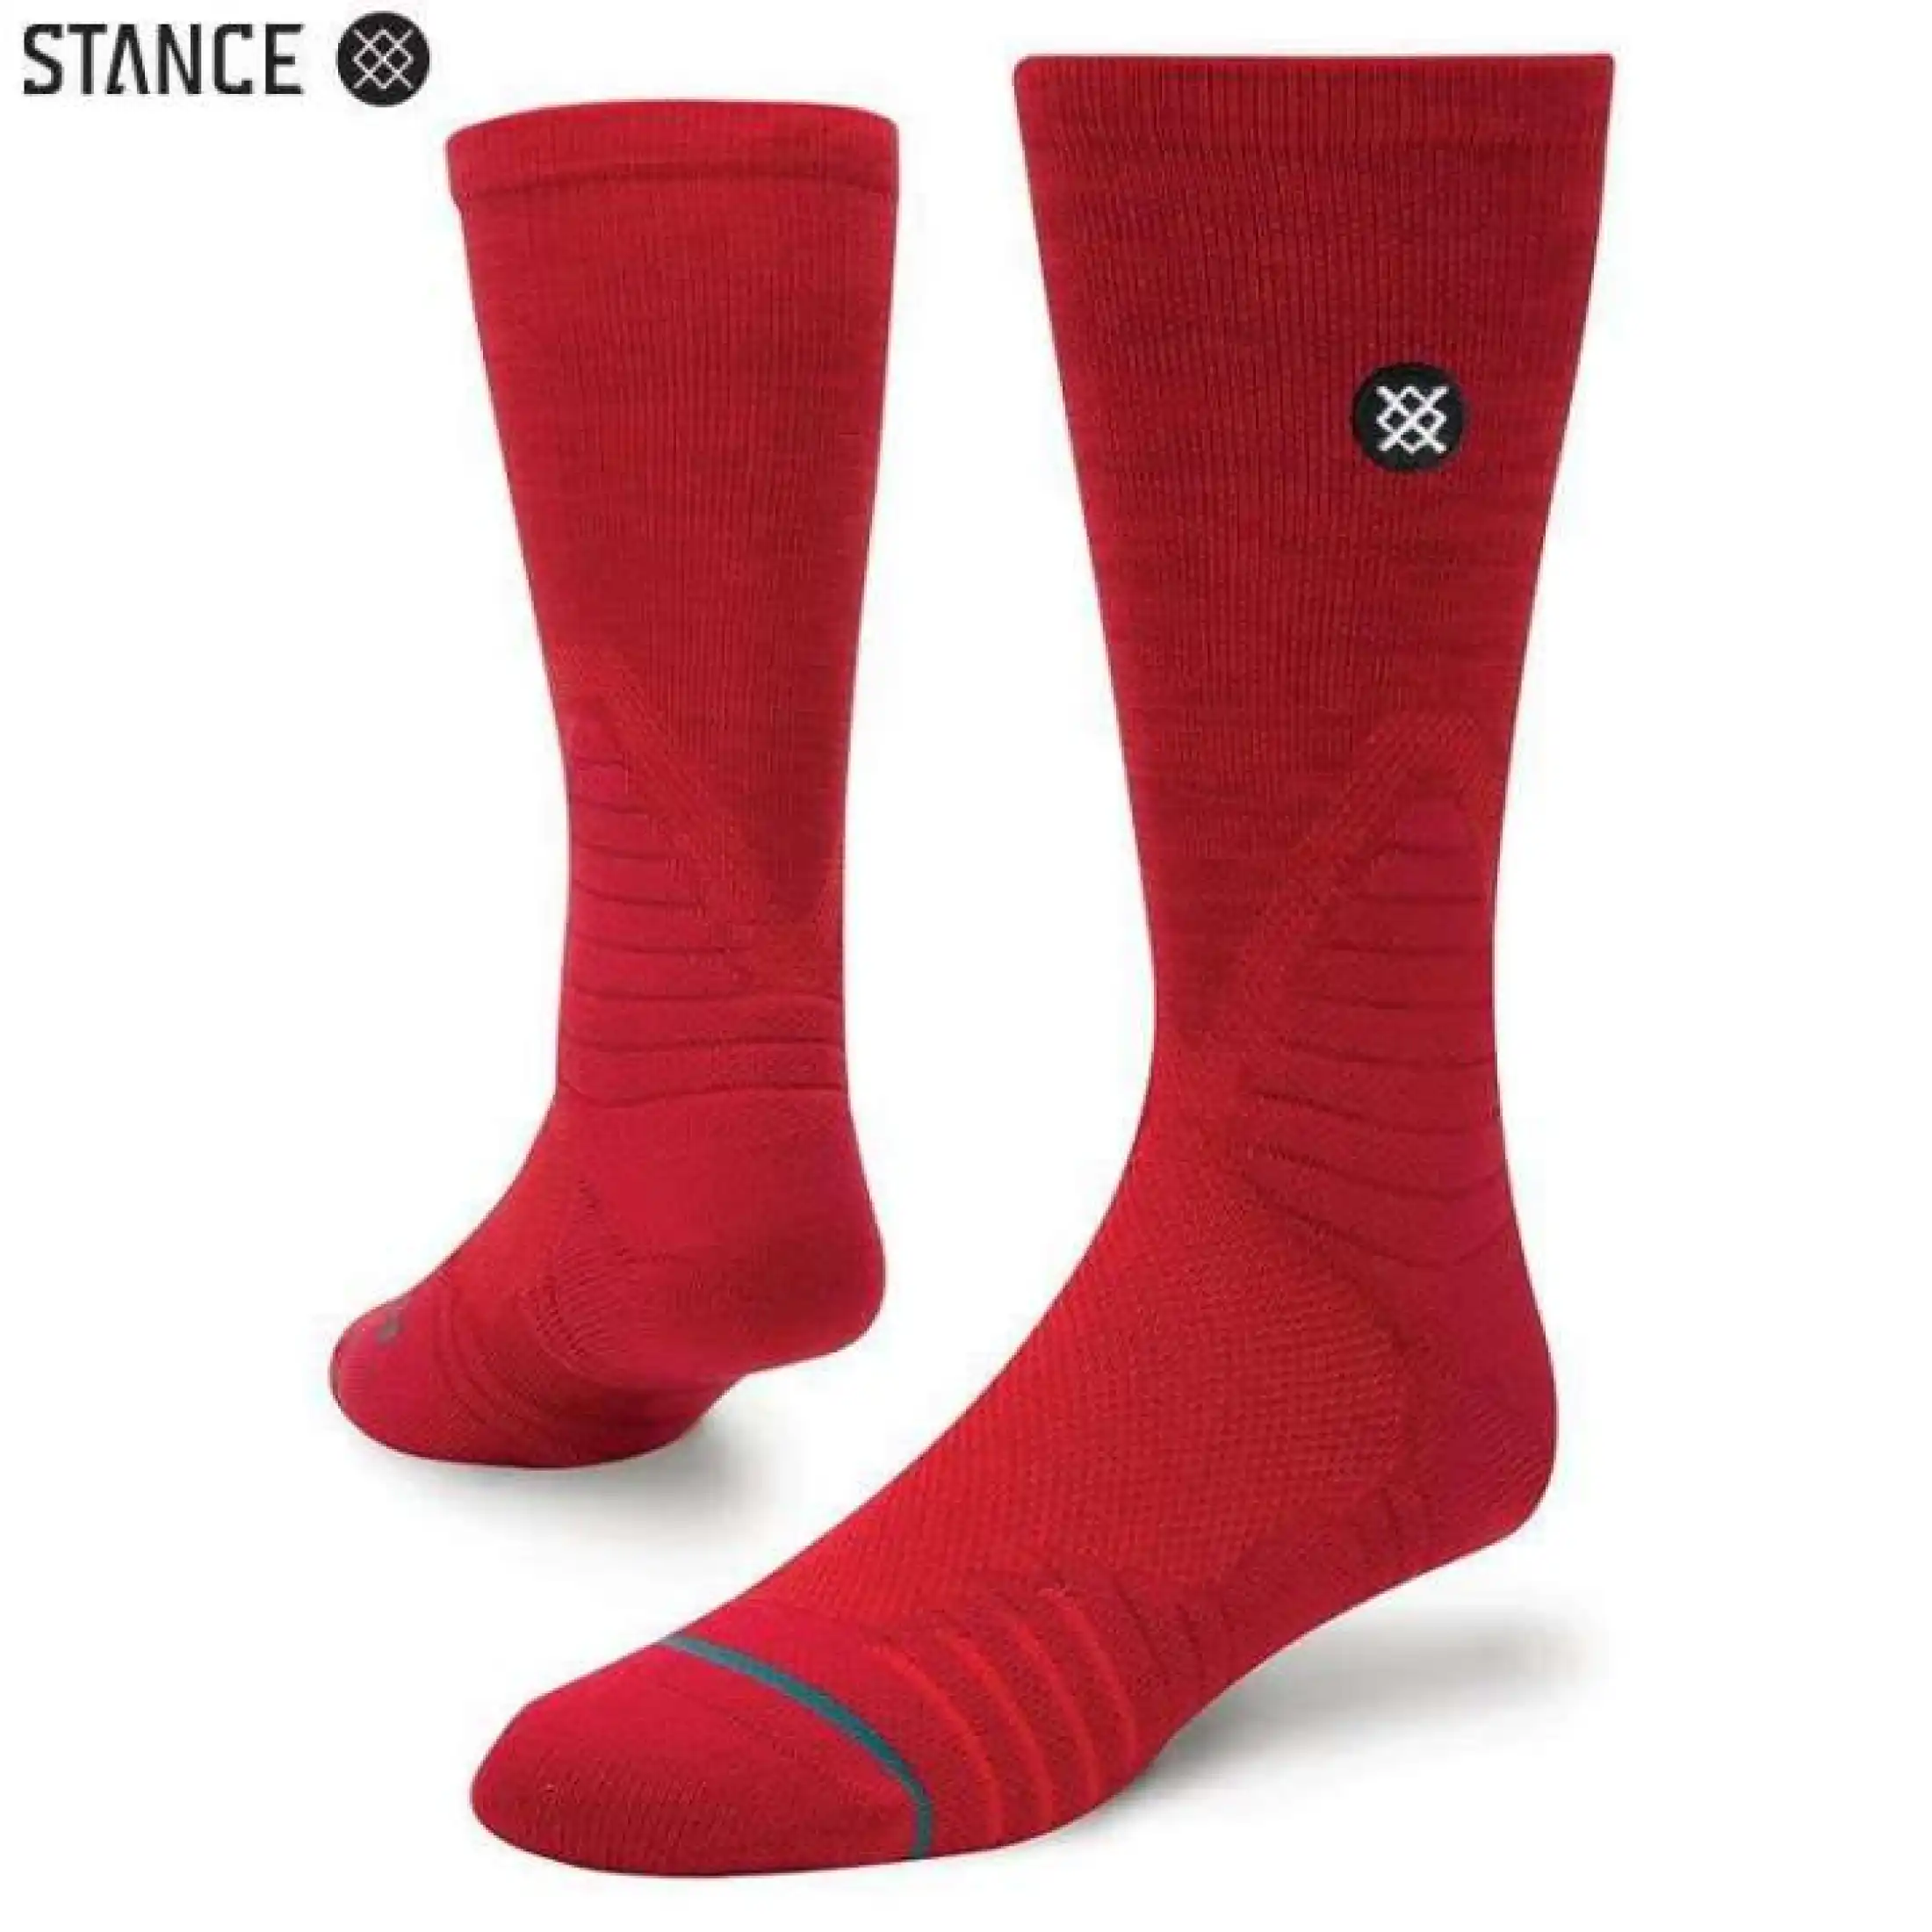 stance elite socks